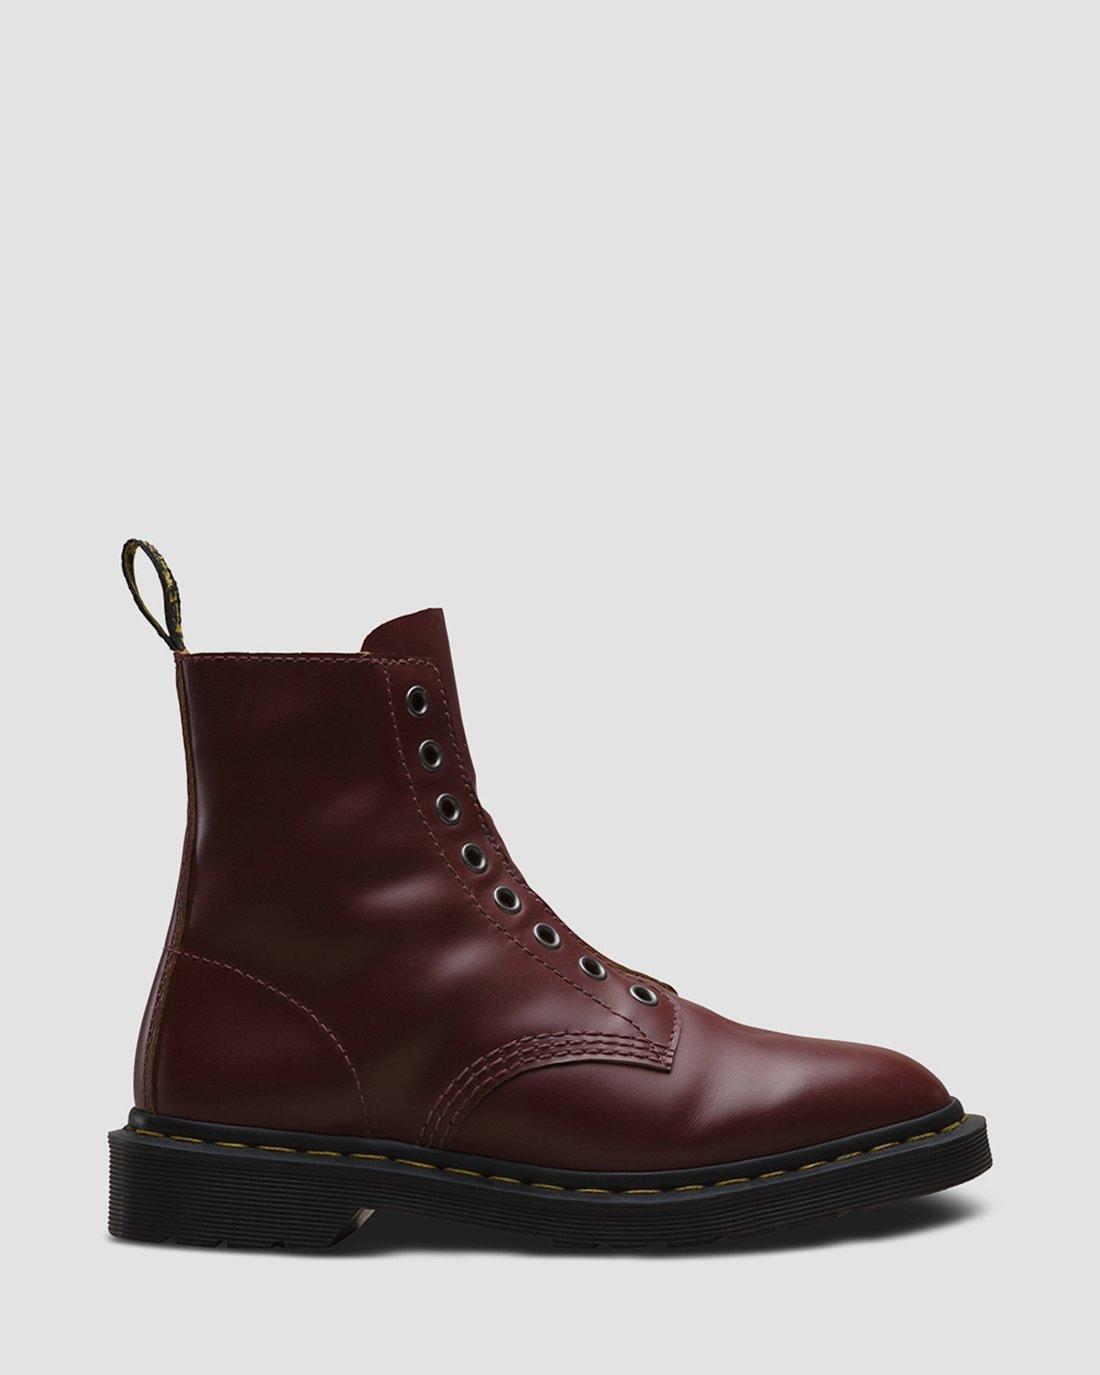 1460 Laceless | SALE | Leather Boots, Shoes & Accessories | Dr Martens UK